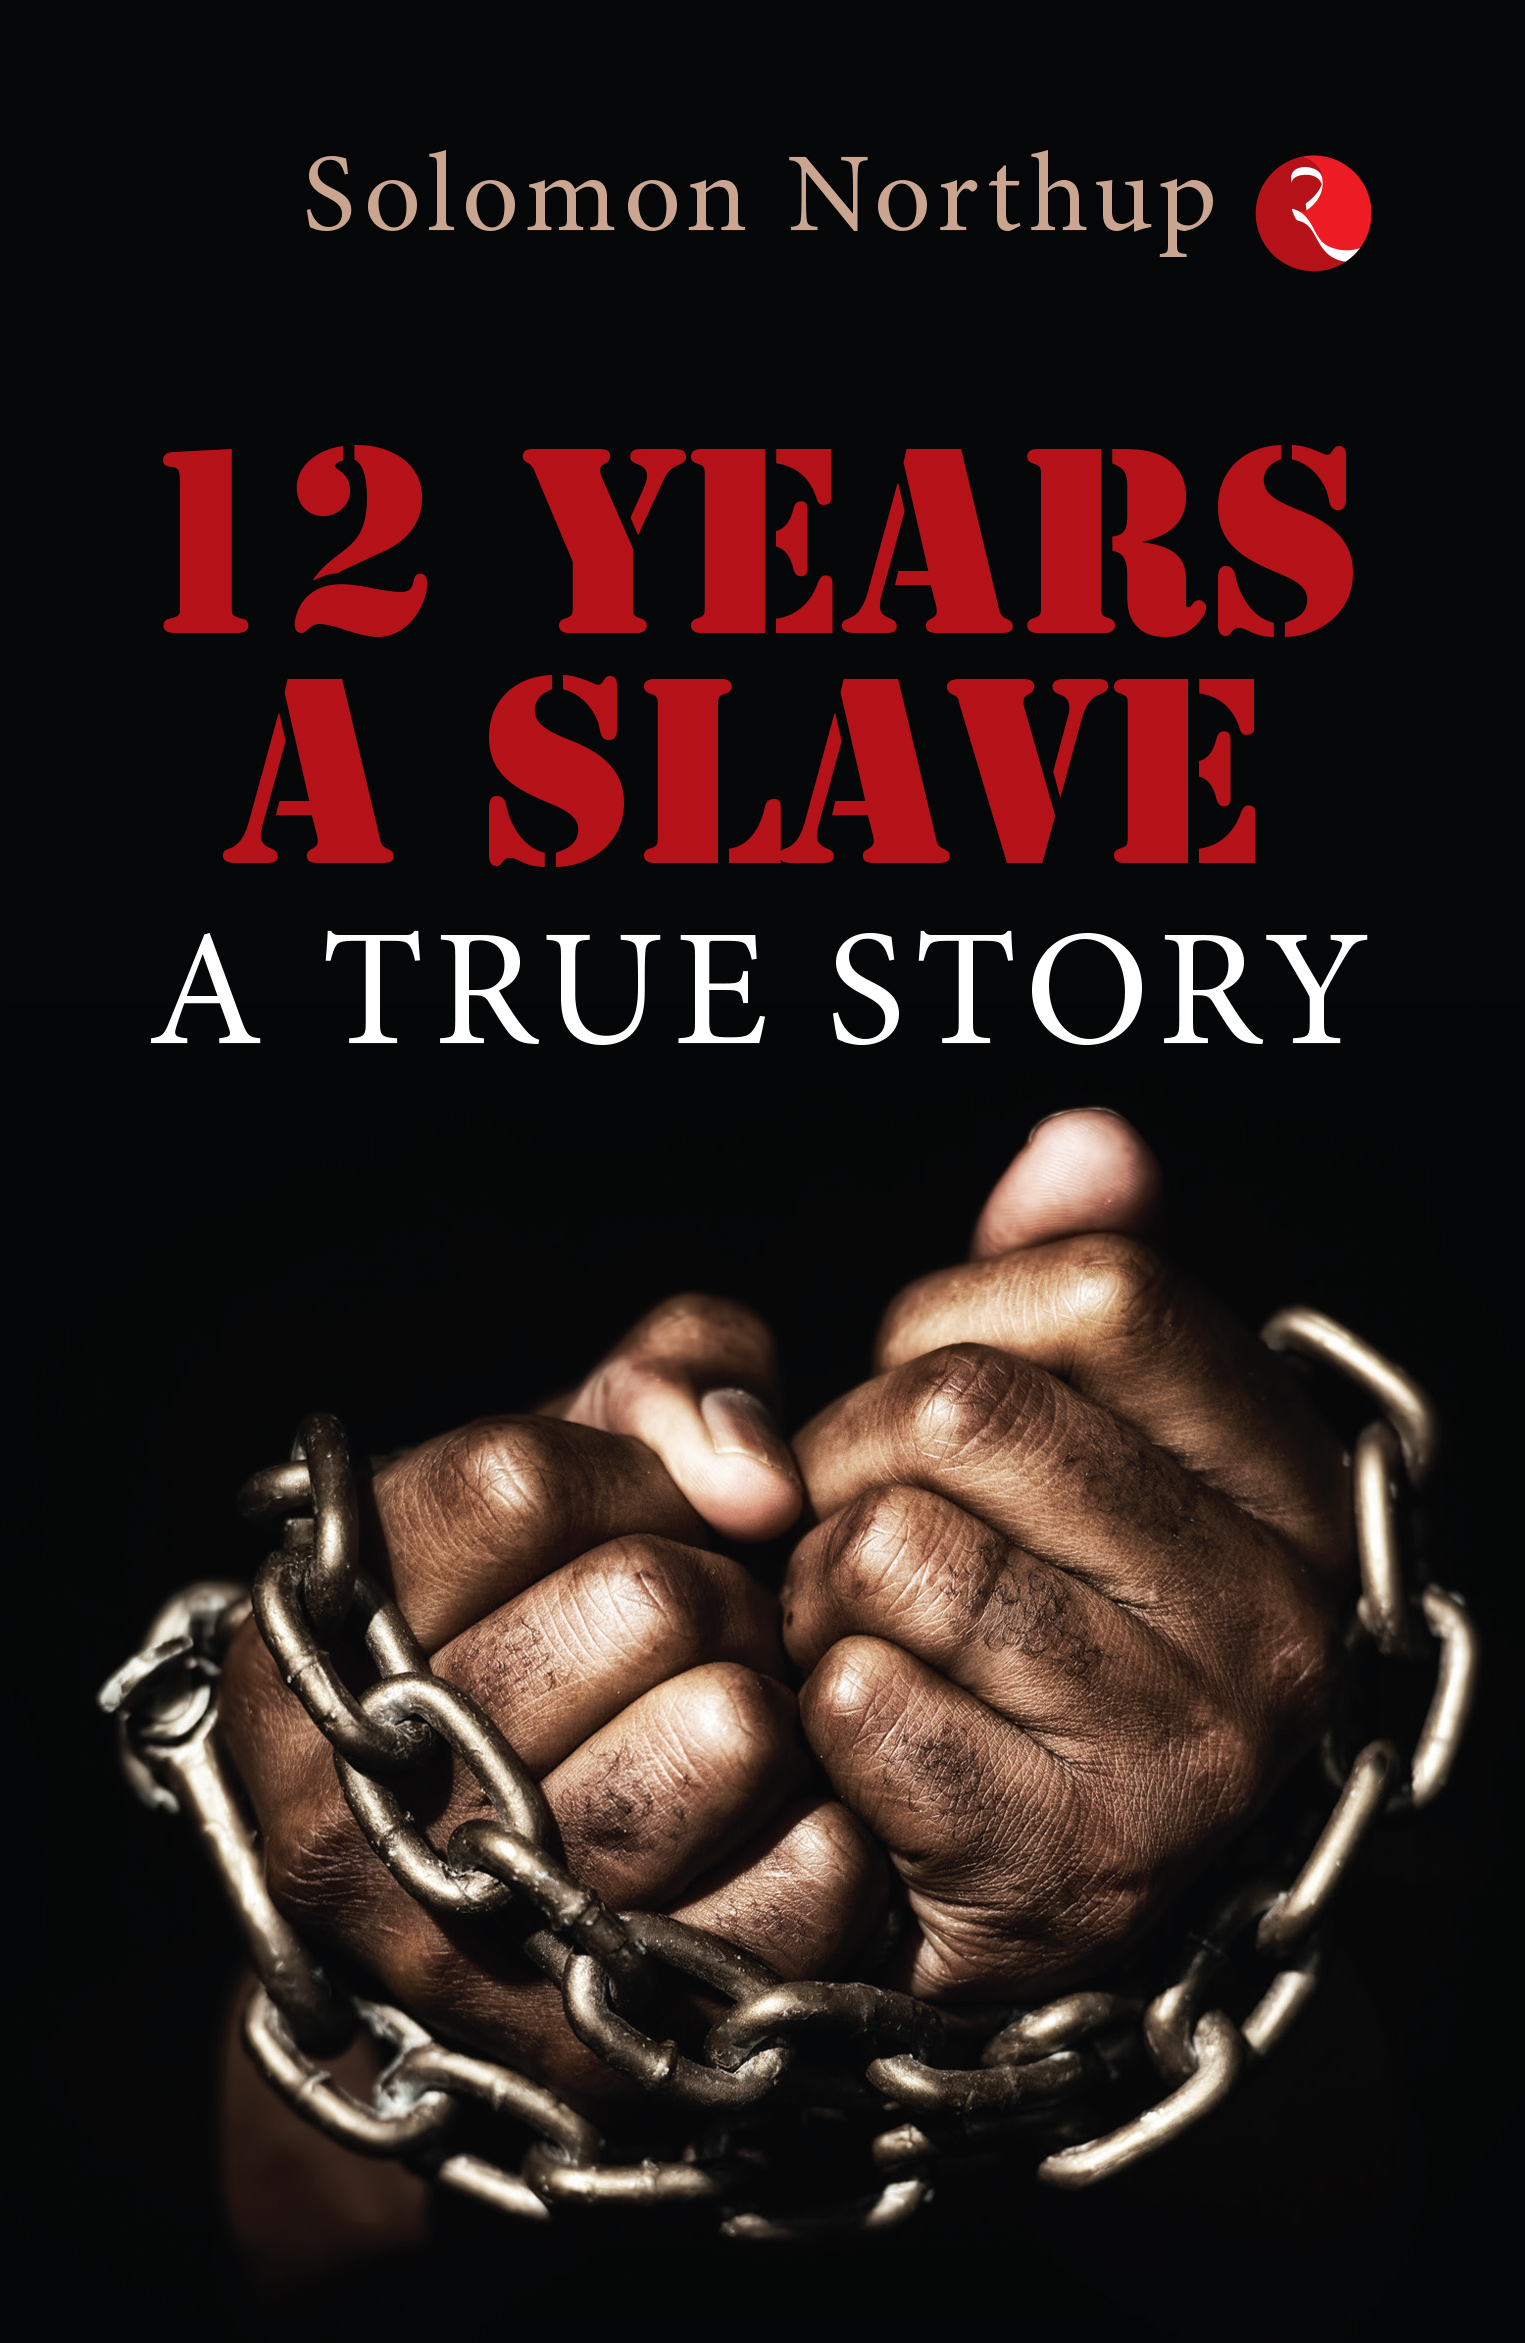 cite mla 12 years a slave